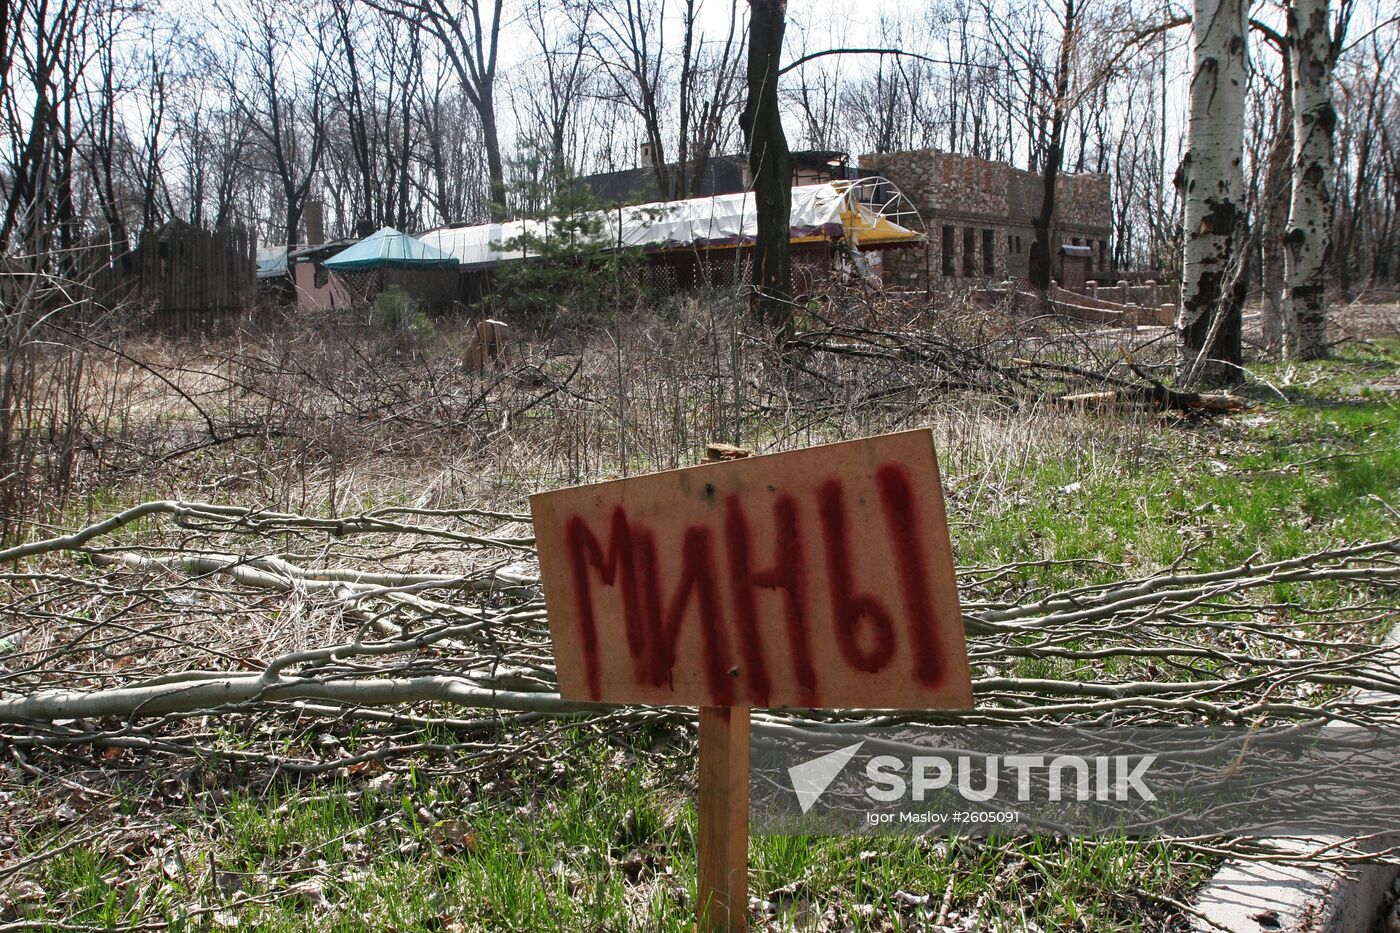 OSCE mission visit vicinities of Peski settlement in Donetsk Region